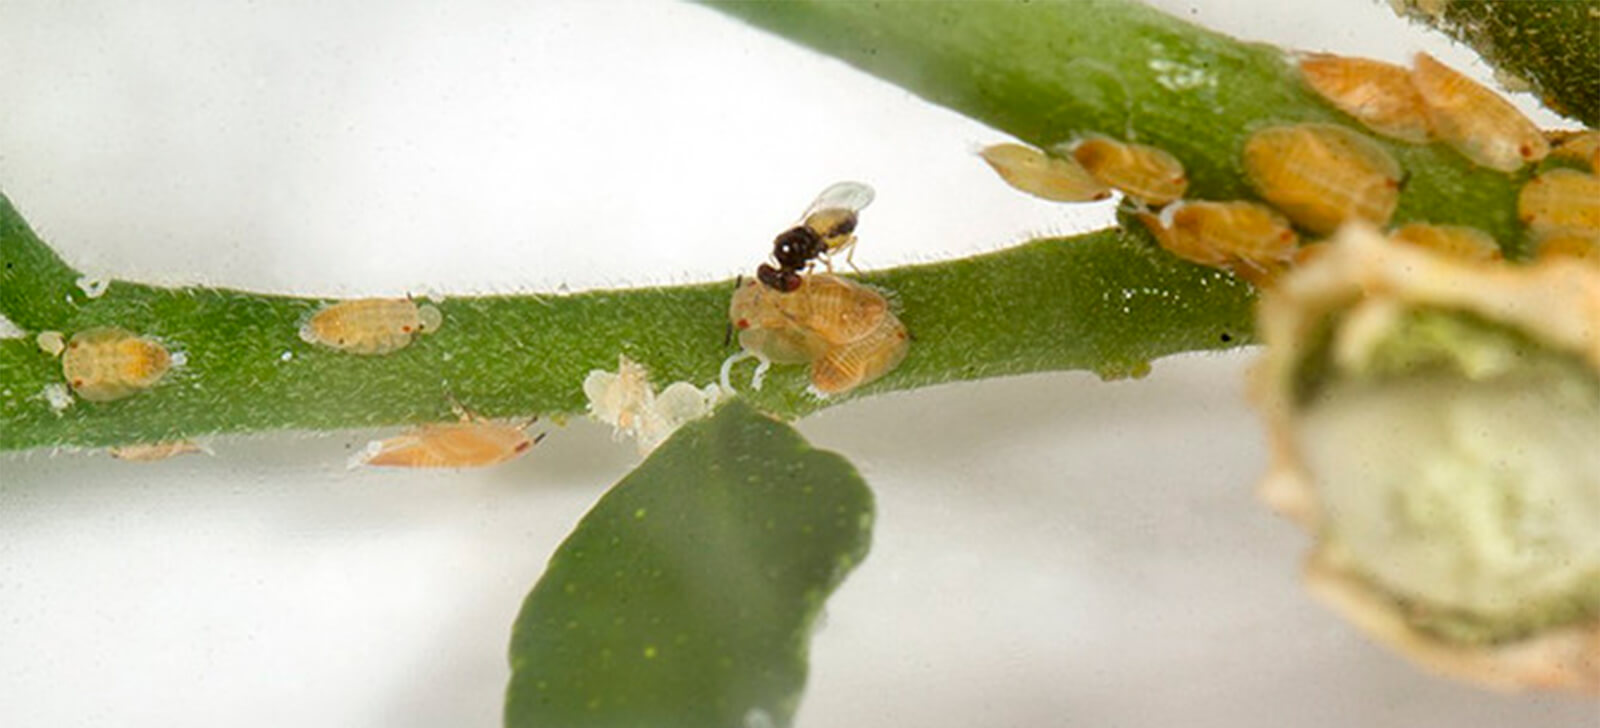 promip manejo integrado de pragas controle biologico soltura de vespas diminui populacao de psilideo onde nao ha controle quimico (2)